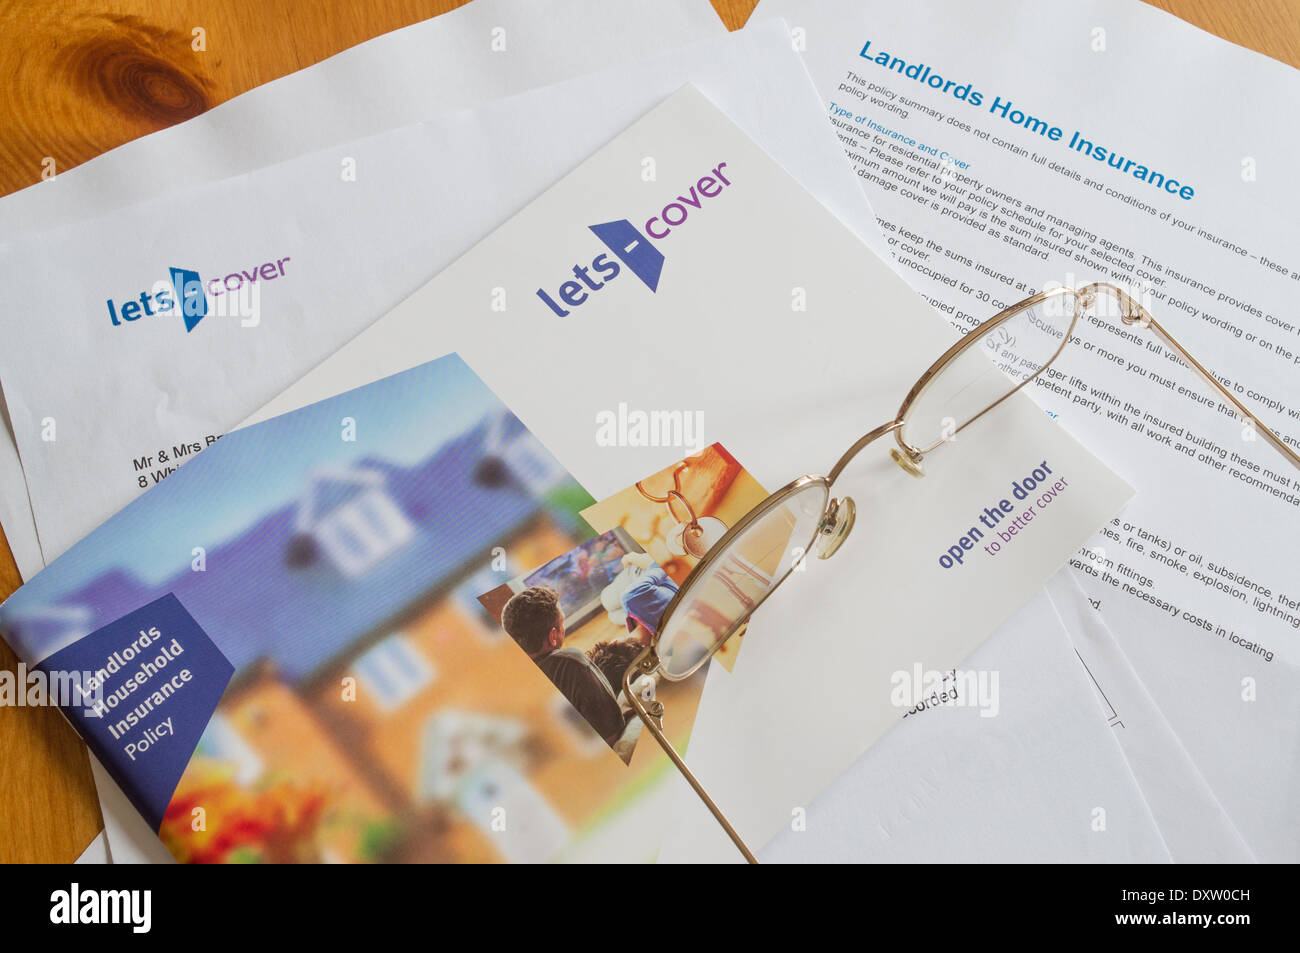 UK Landlord's household insurance documents - Landlords' expenses concept Stock Photo